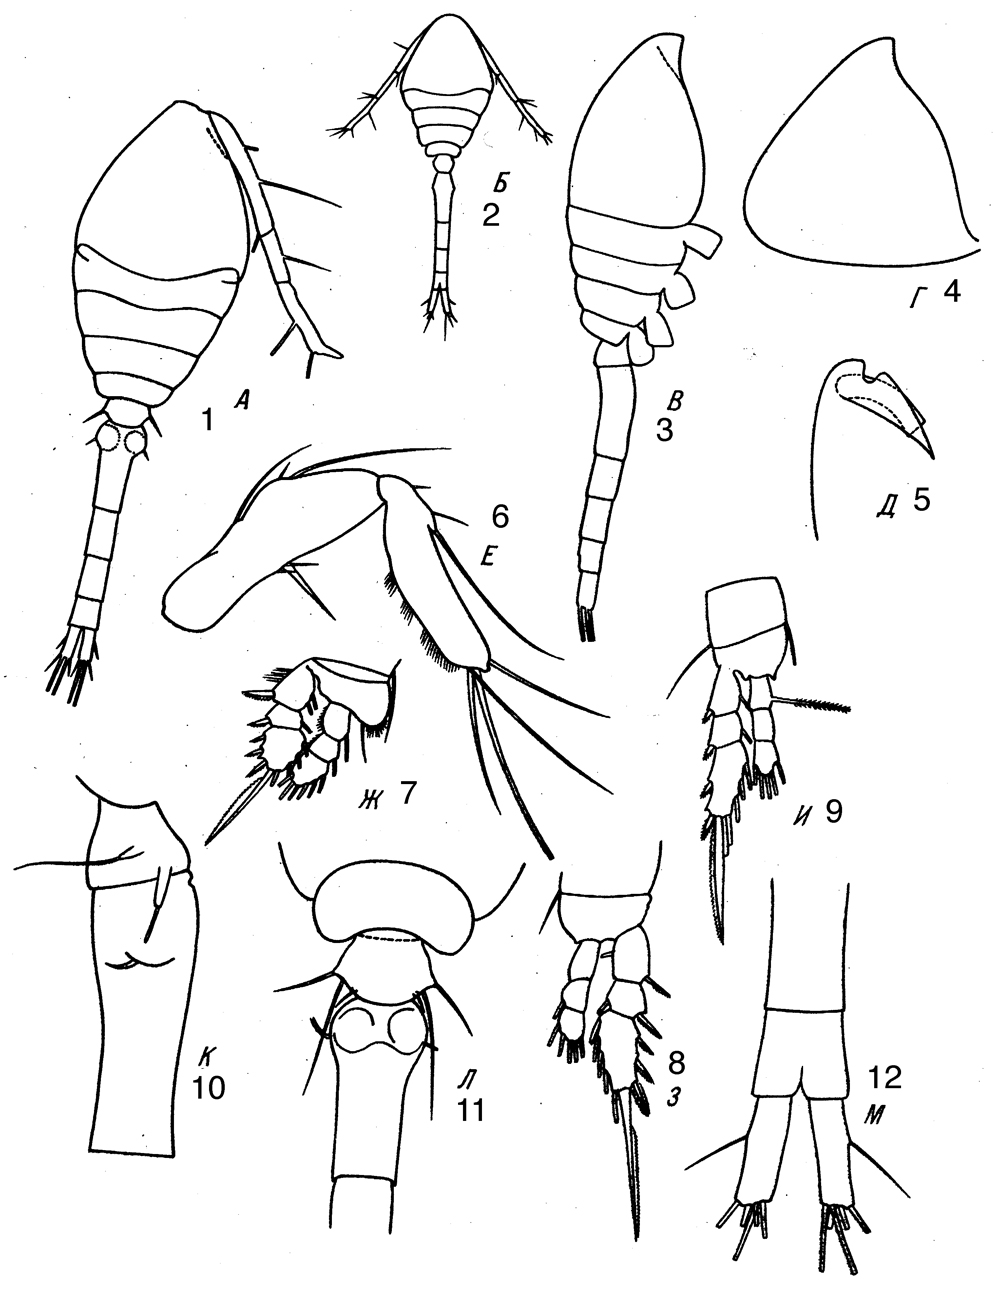 Species Dioithona minuta - Plate 3 of morphological figures